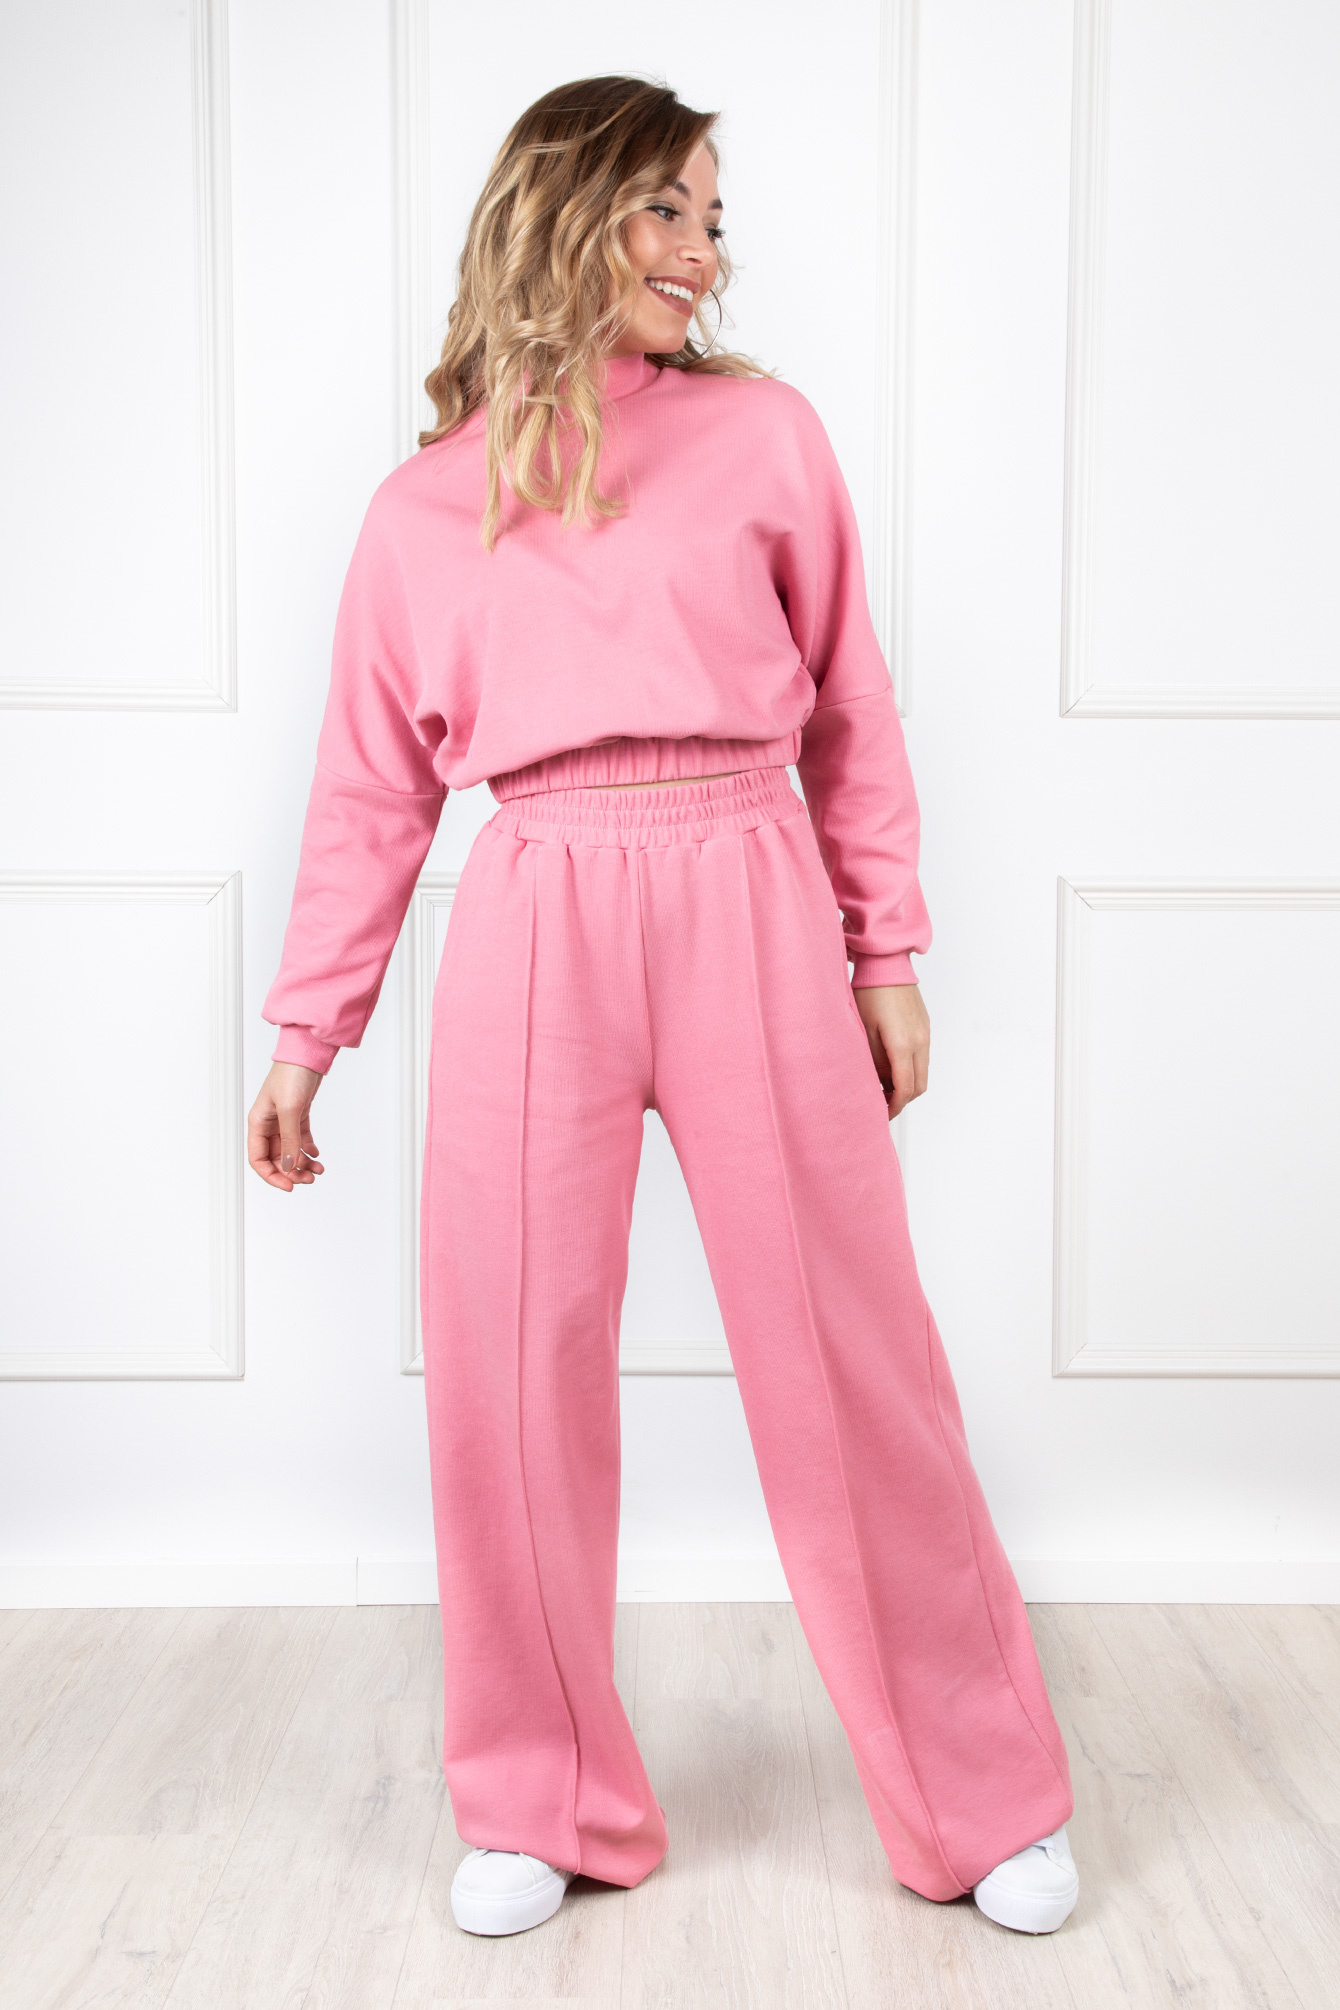 Met opzet wasserette Tegenover Huispak Emily pink I 2 piece comfy pink - Famous Store